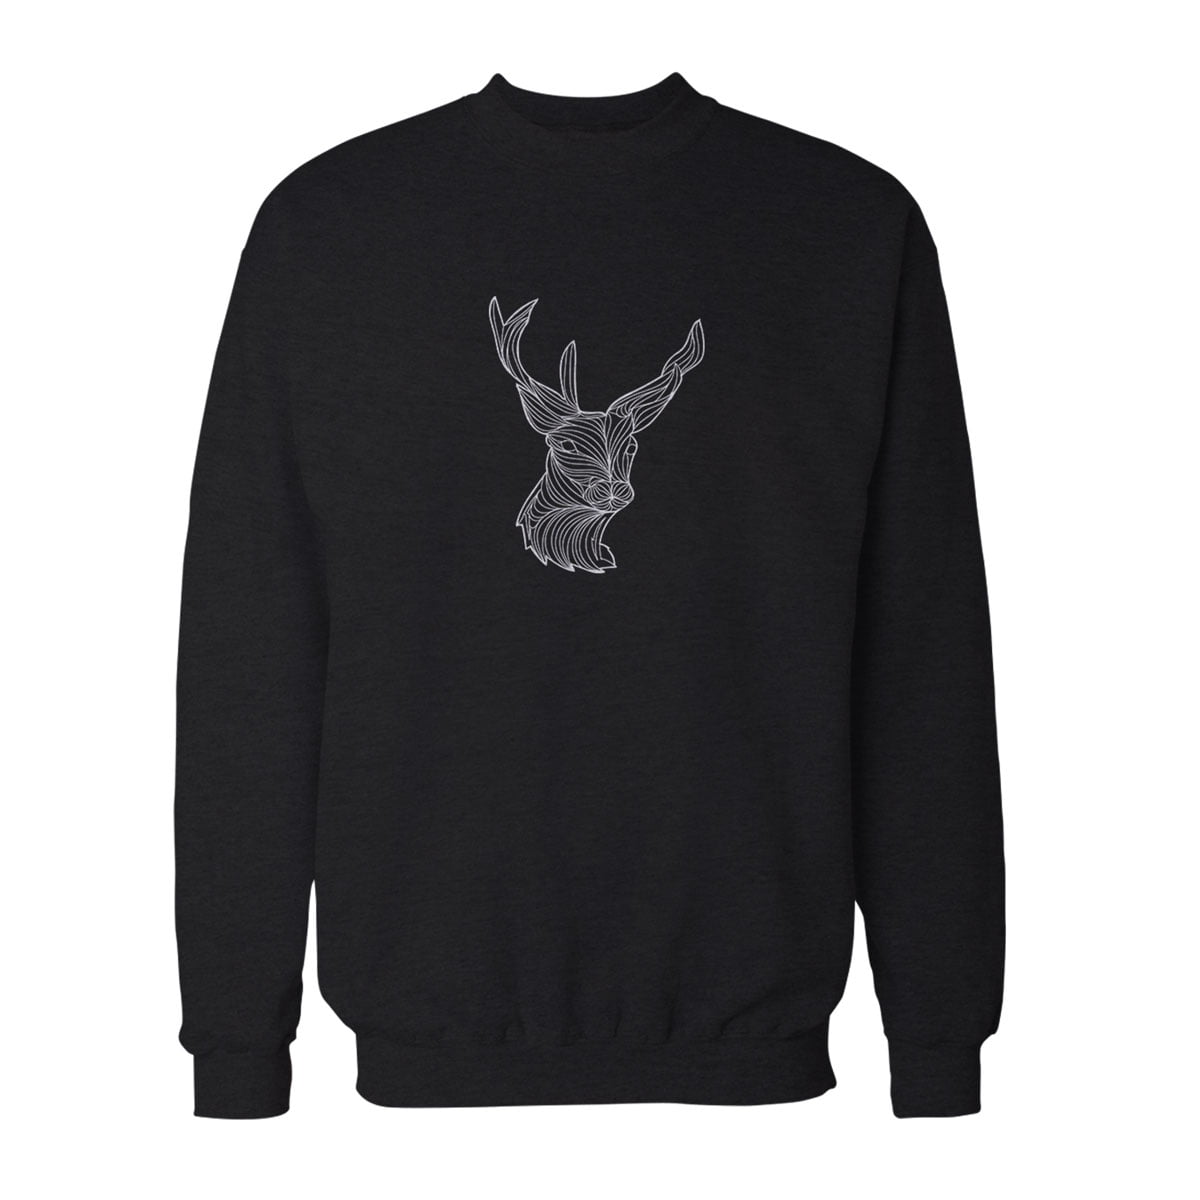 Orijinal geyik mandala sweatshirt s - geyik mandala unisex sweatshirt - figurex